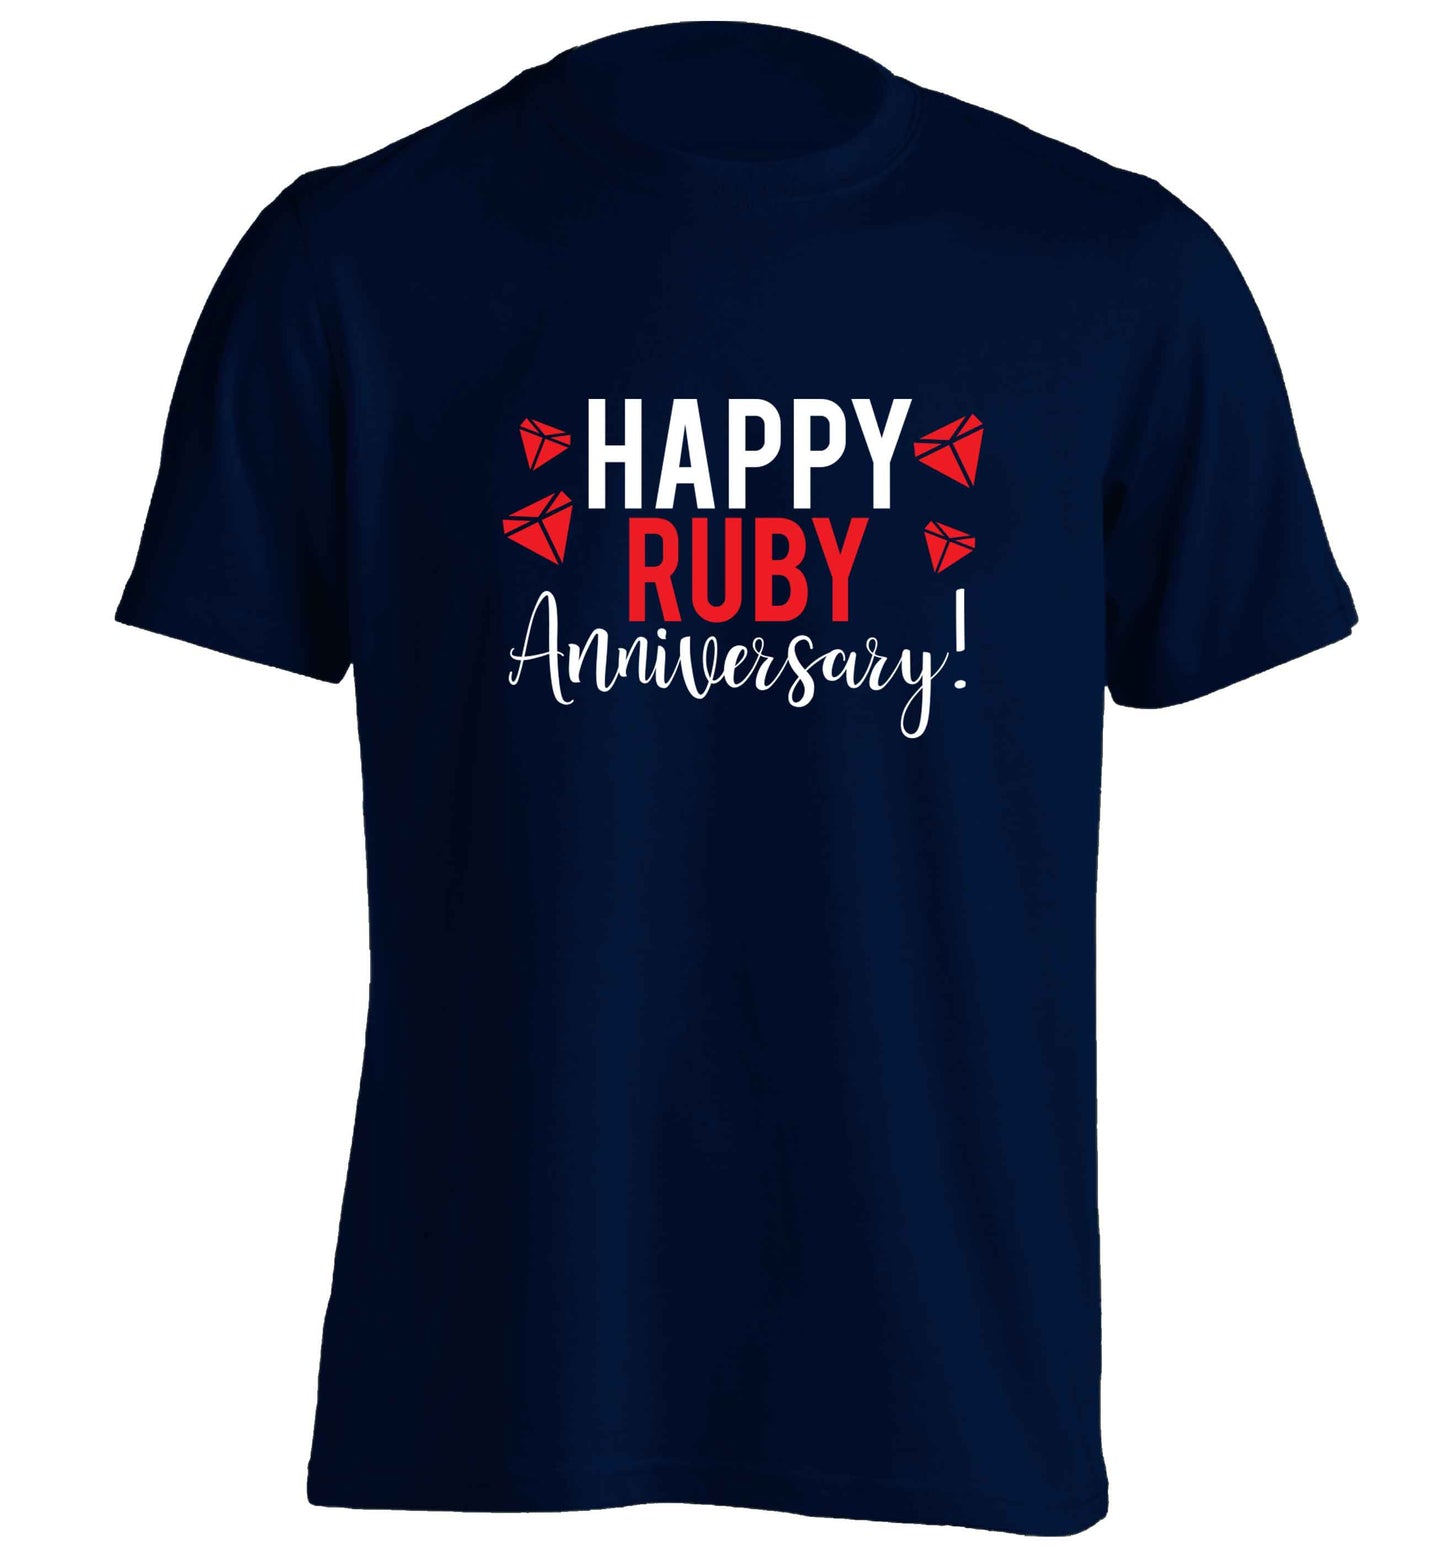 Happy ruby anniversary! adults unisex navy Tshirt 2XL